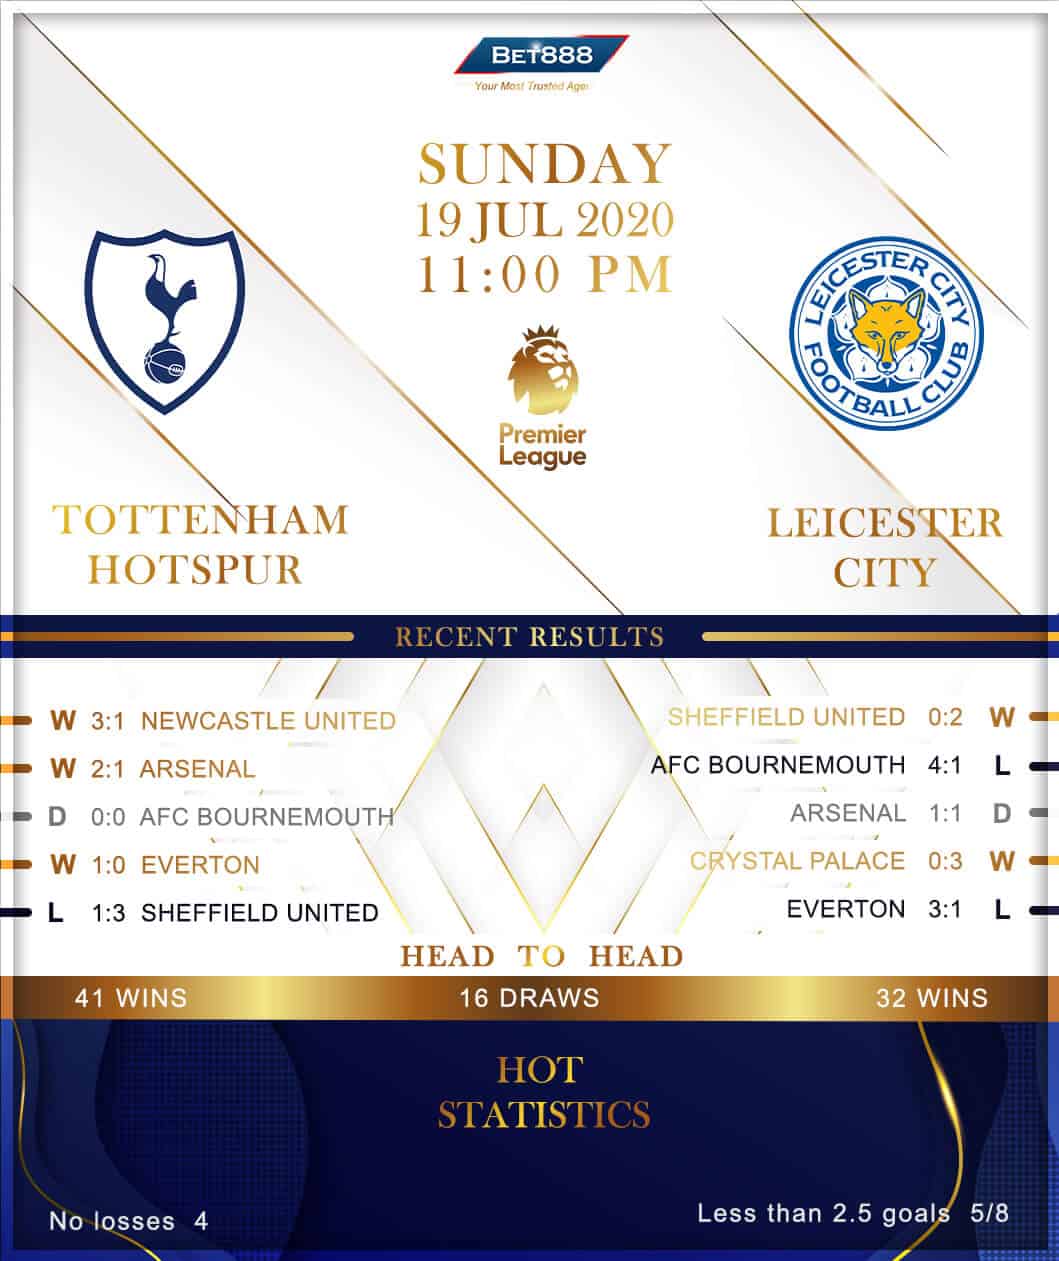 Tottenham Hotspur vs Leicester City 19/07/20